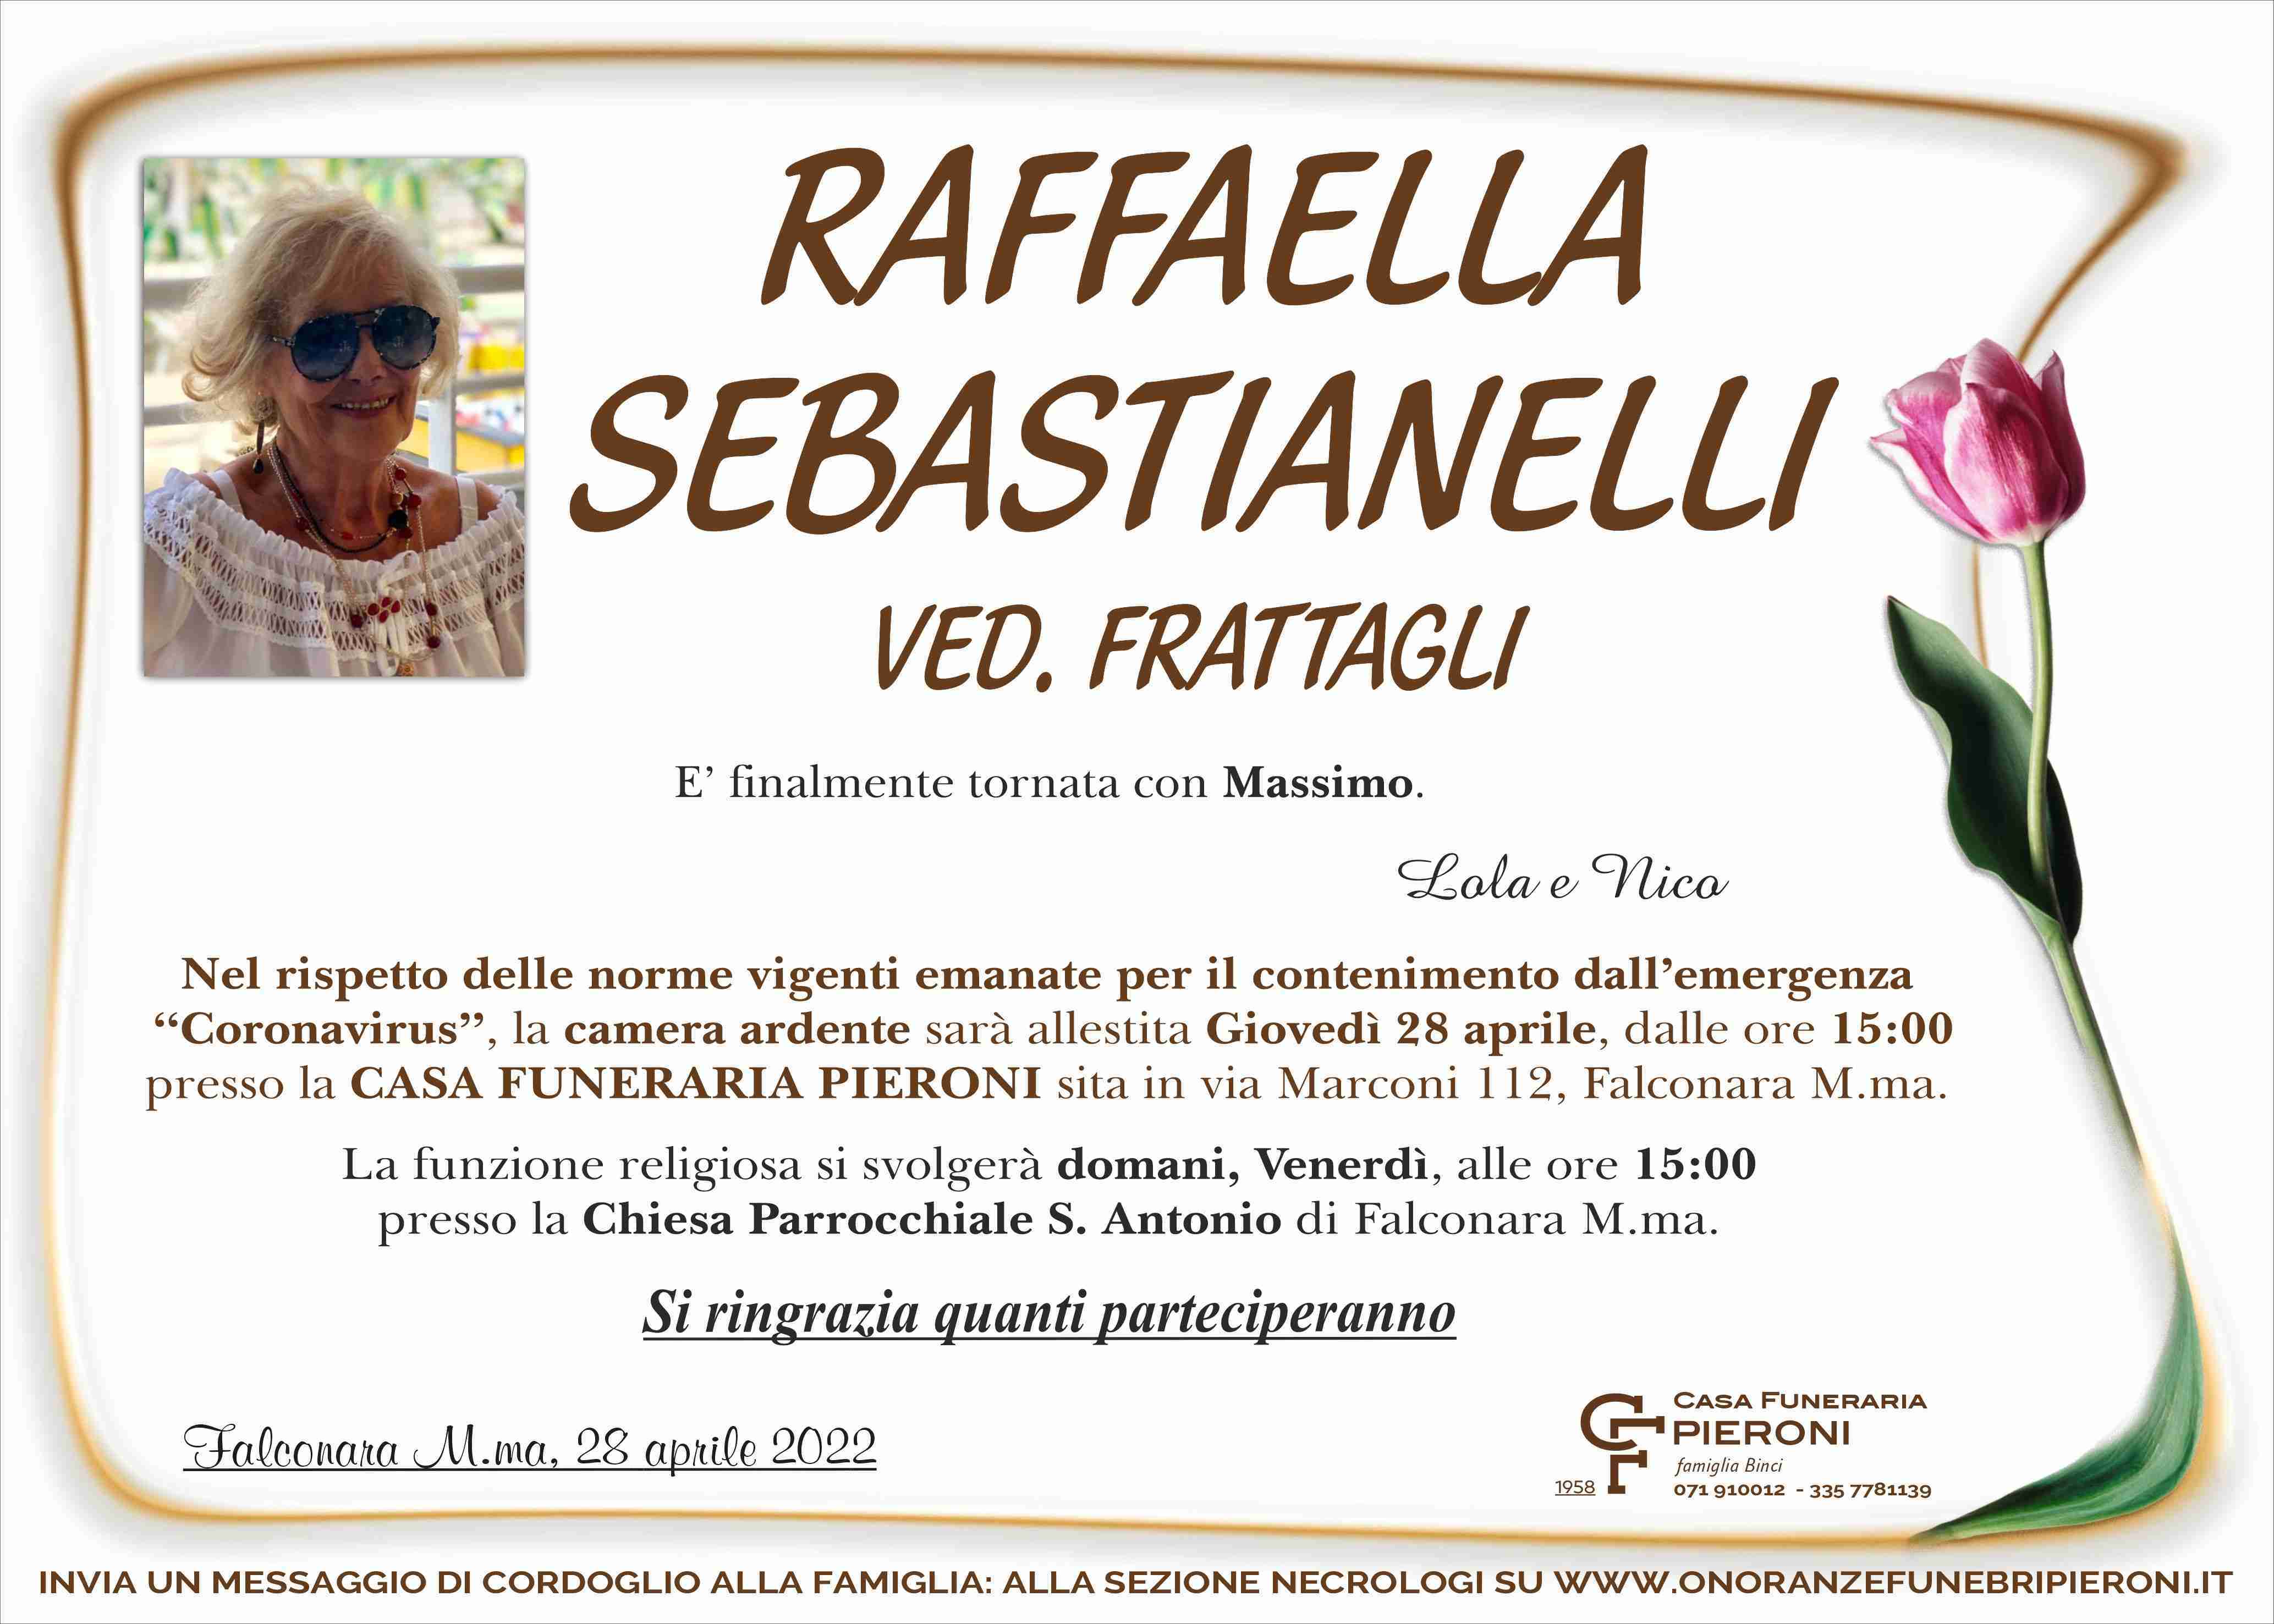 Raffaella Sebastianelli